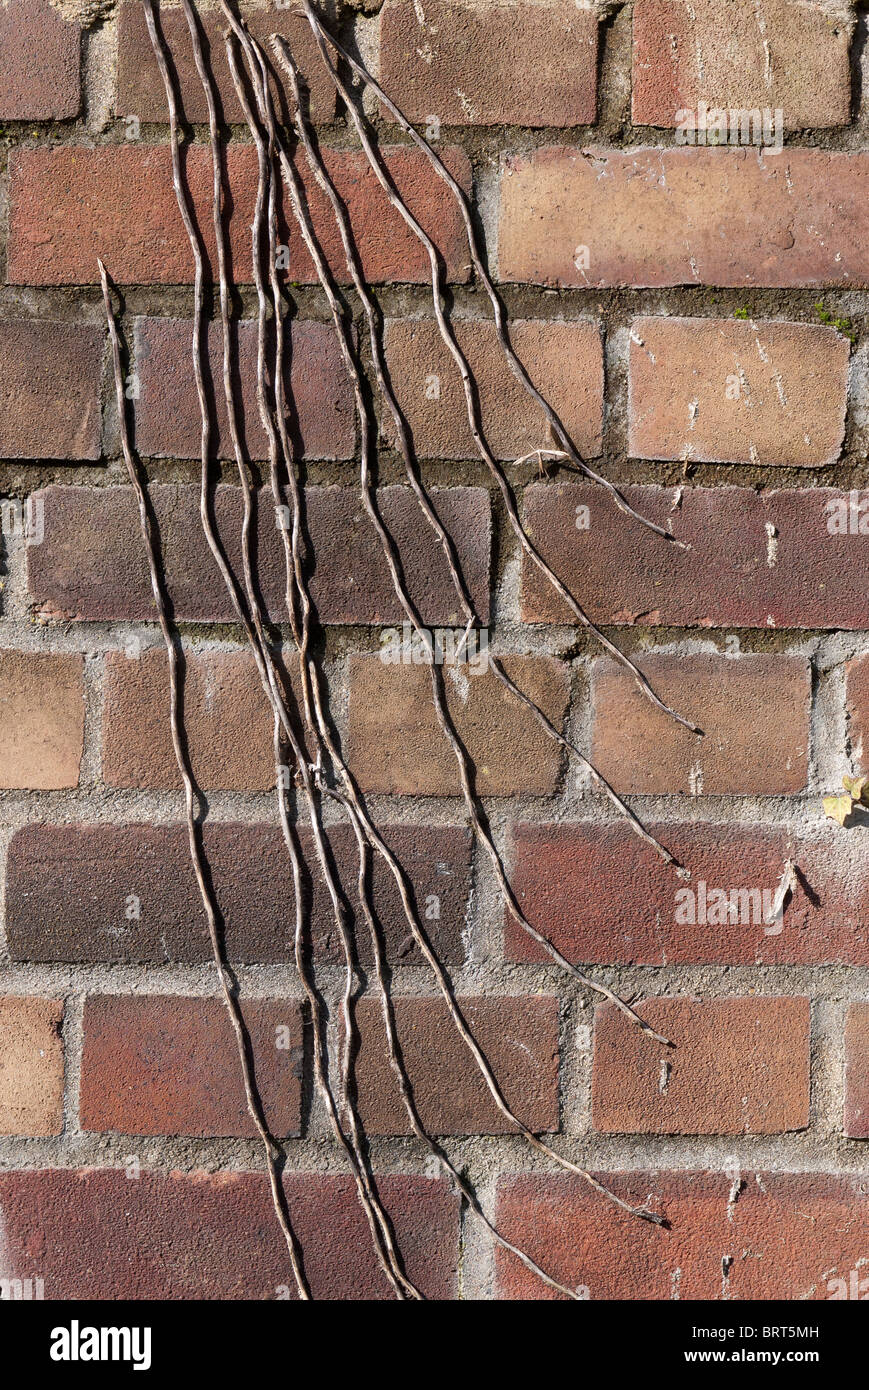 Dead ivy stems on brickwork Stock Photo